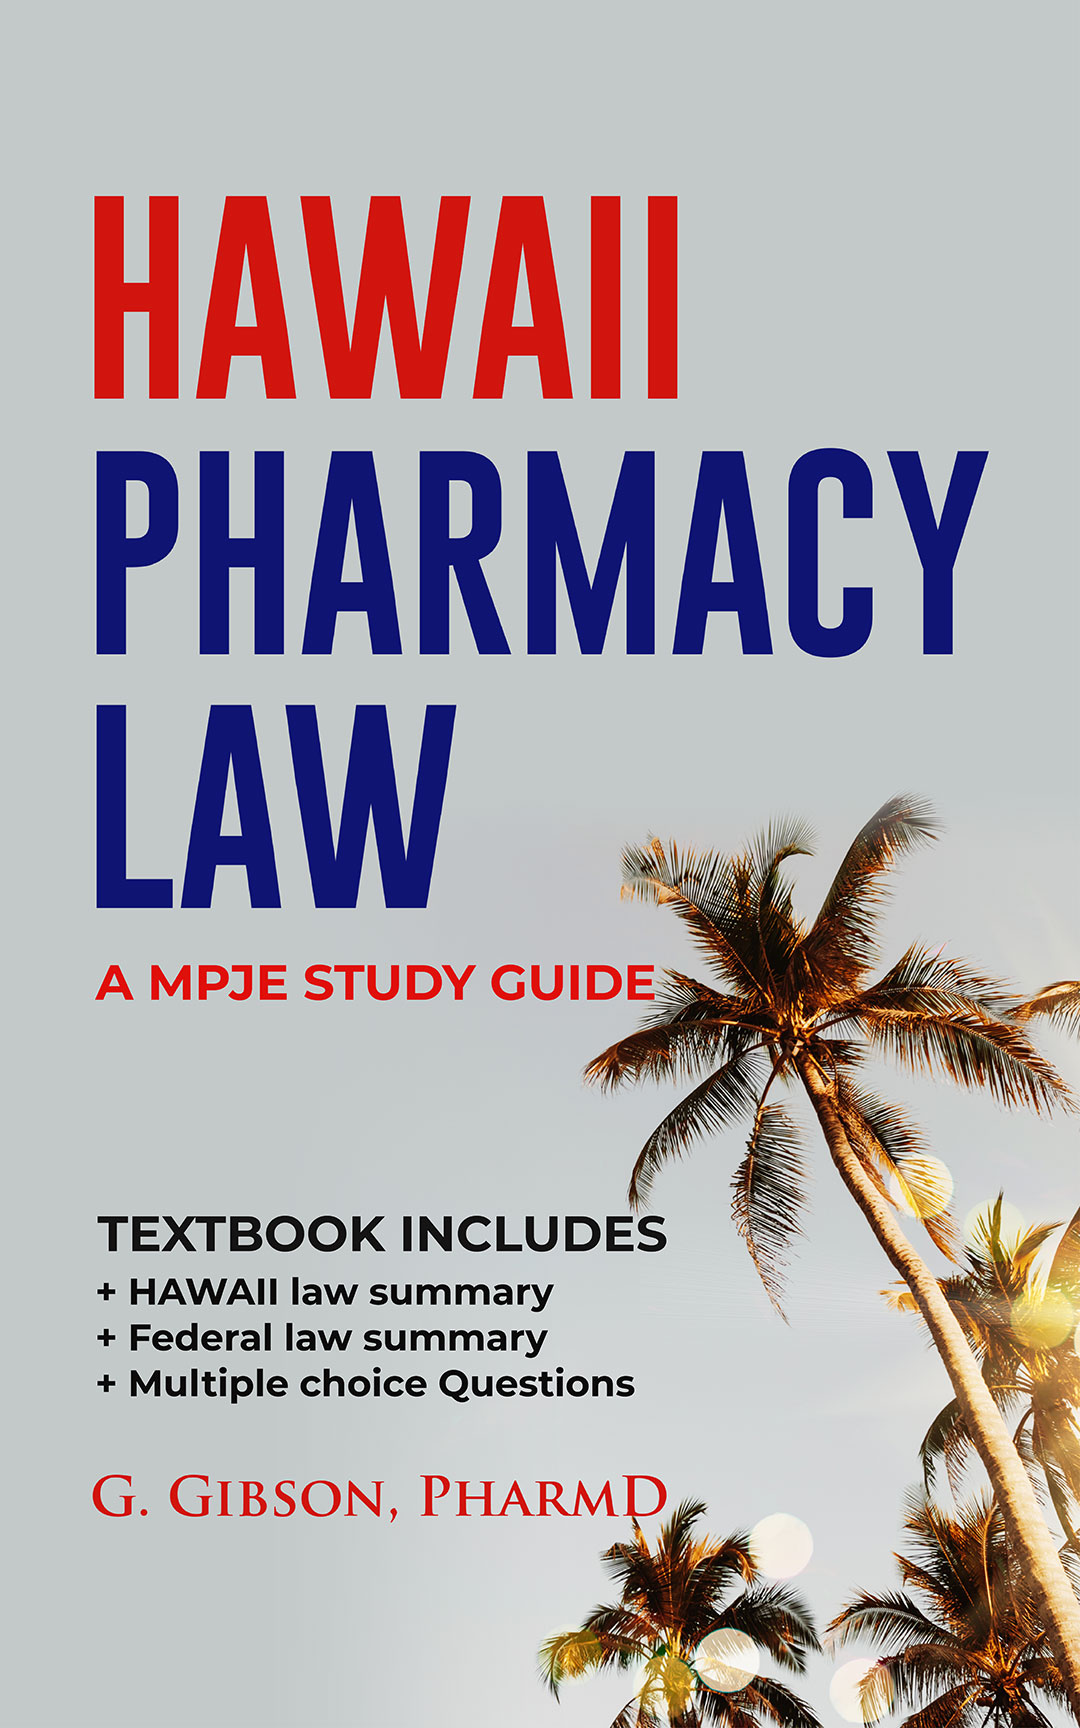 Hawaii Pharmacy Law: A MPJE Study Guide